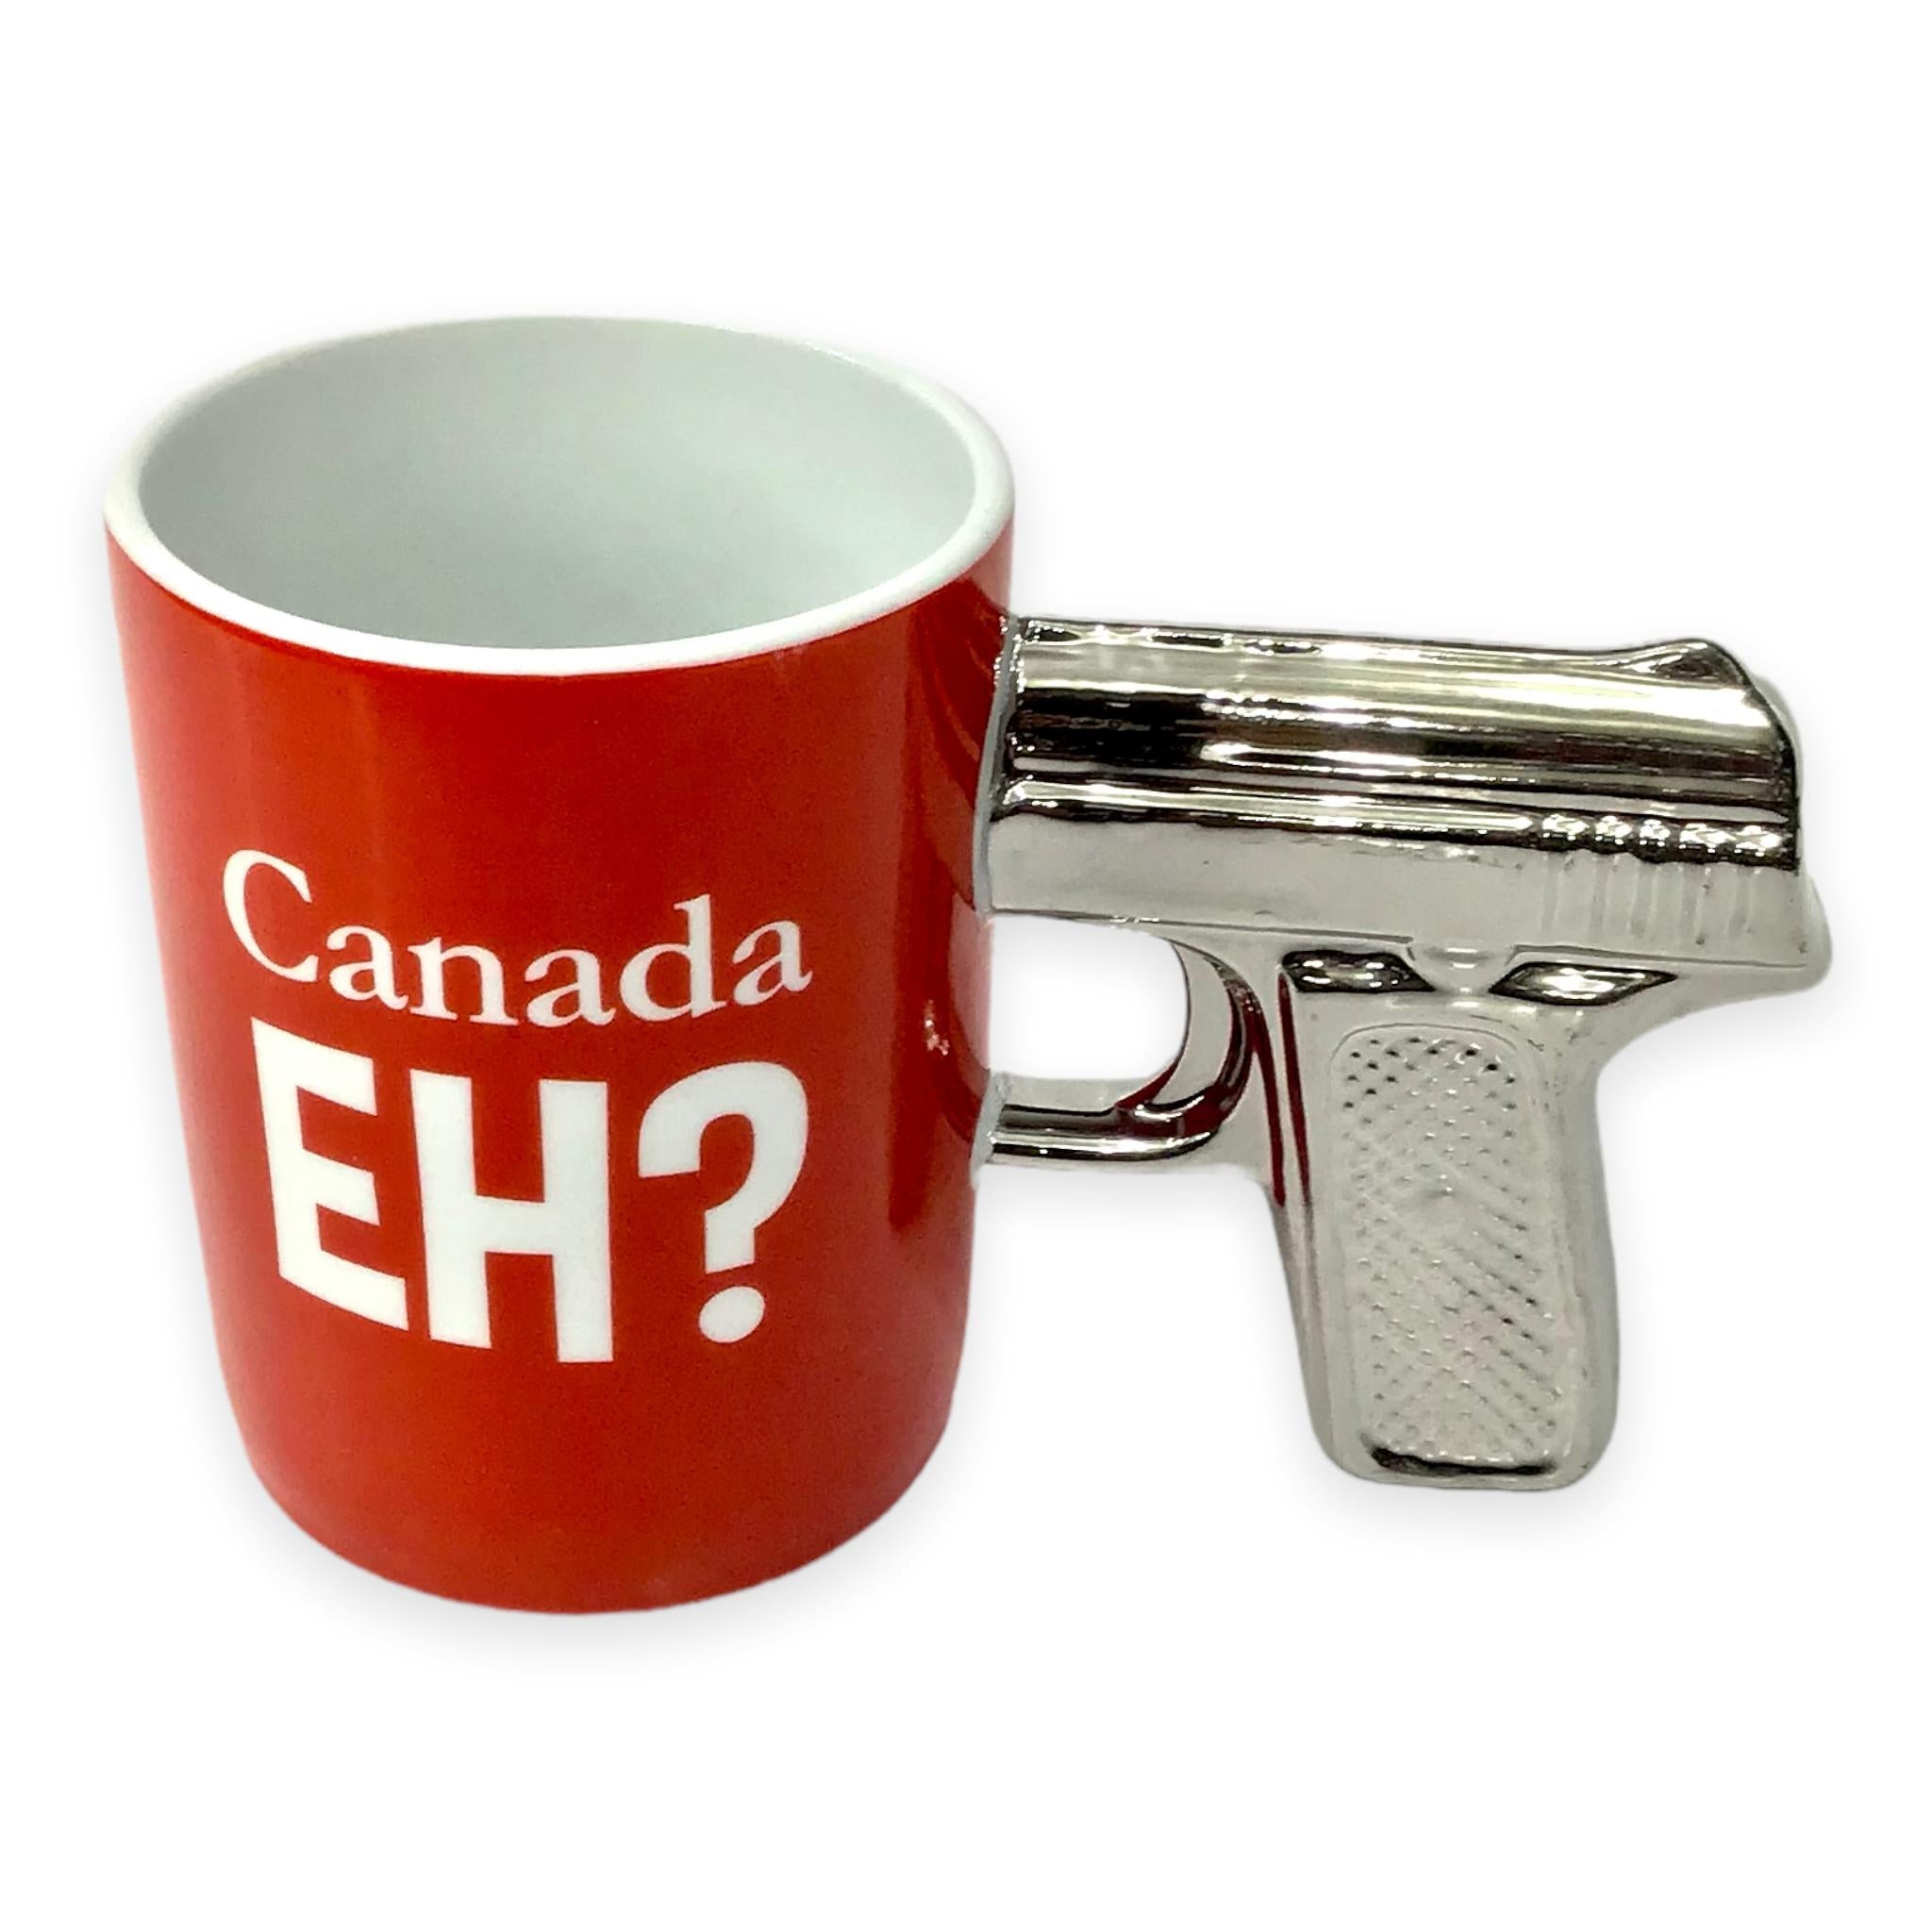 Canada Eh? Ceramic Coffee Mugs 2 Colors Silver and Red Gun Mugs | Silver Gun Shaped Handle| Silver Handle Funny Pistol Mug | Special Cool Gun Coffee Mug